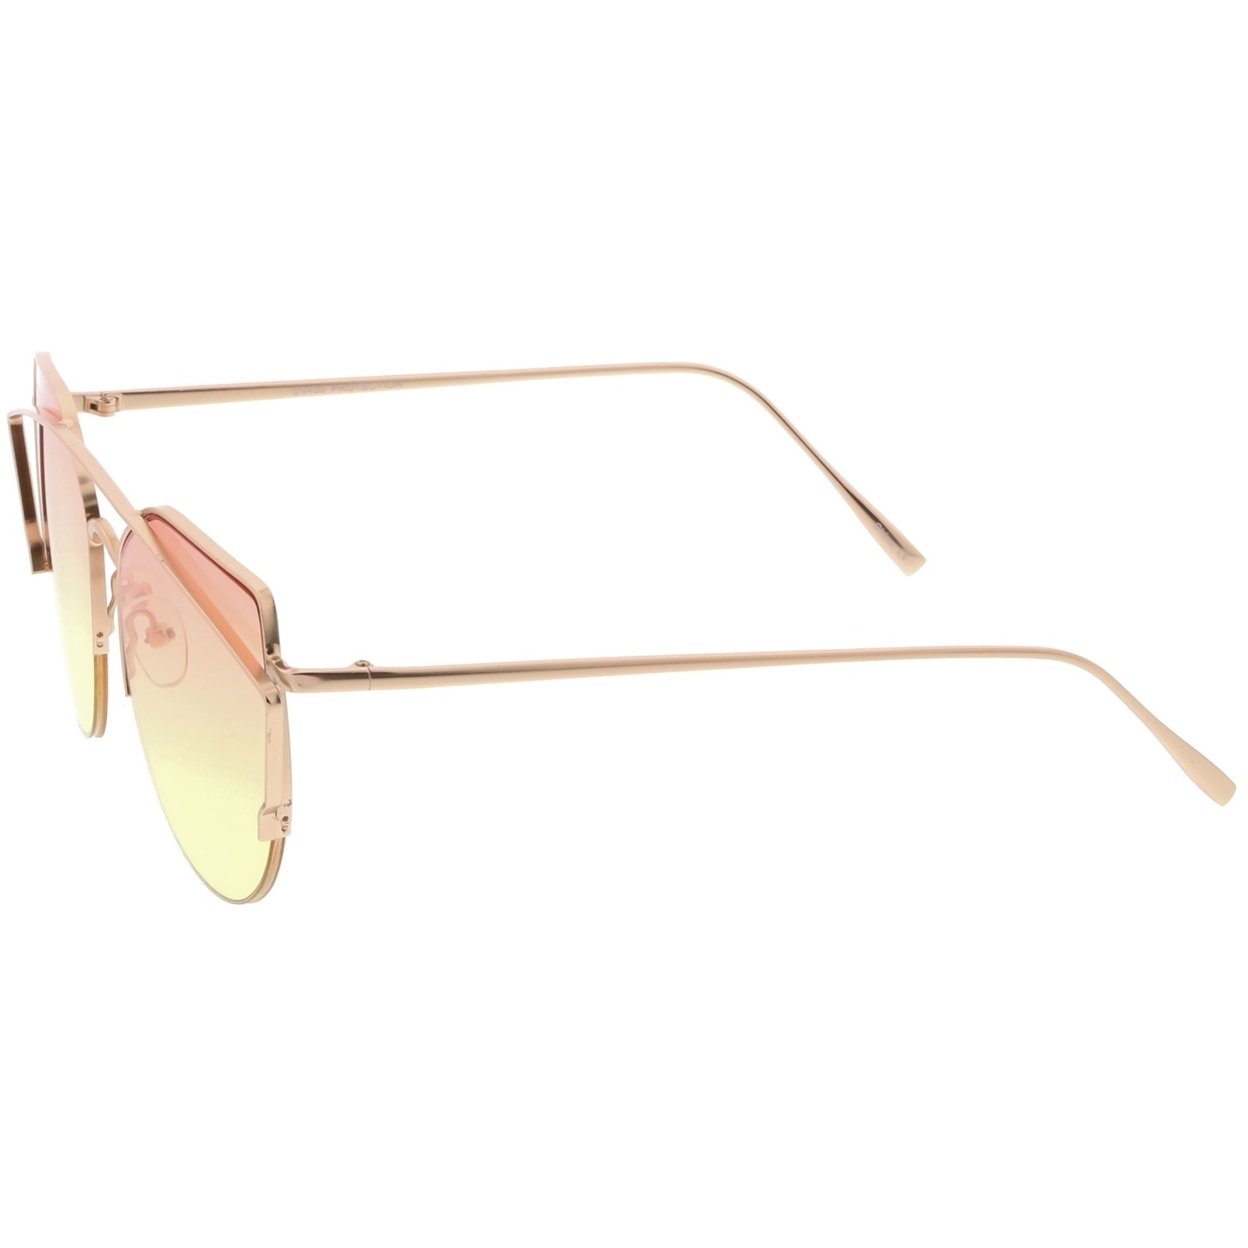 Women's Semi Rimless Metal Brow Bar Round Colored Flat Lens Cat Eye Sunglasses - Gold / Pink-Purple